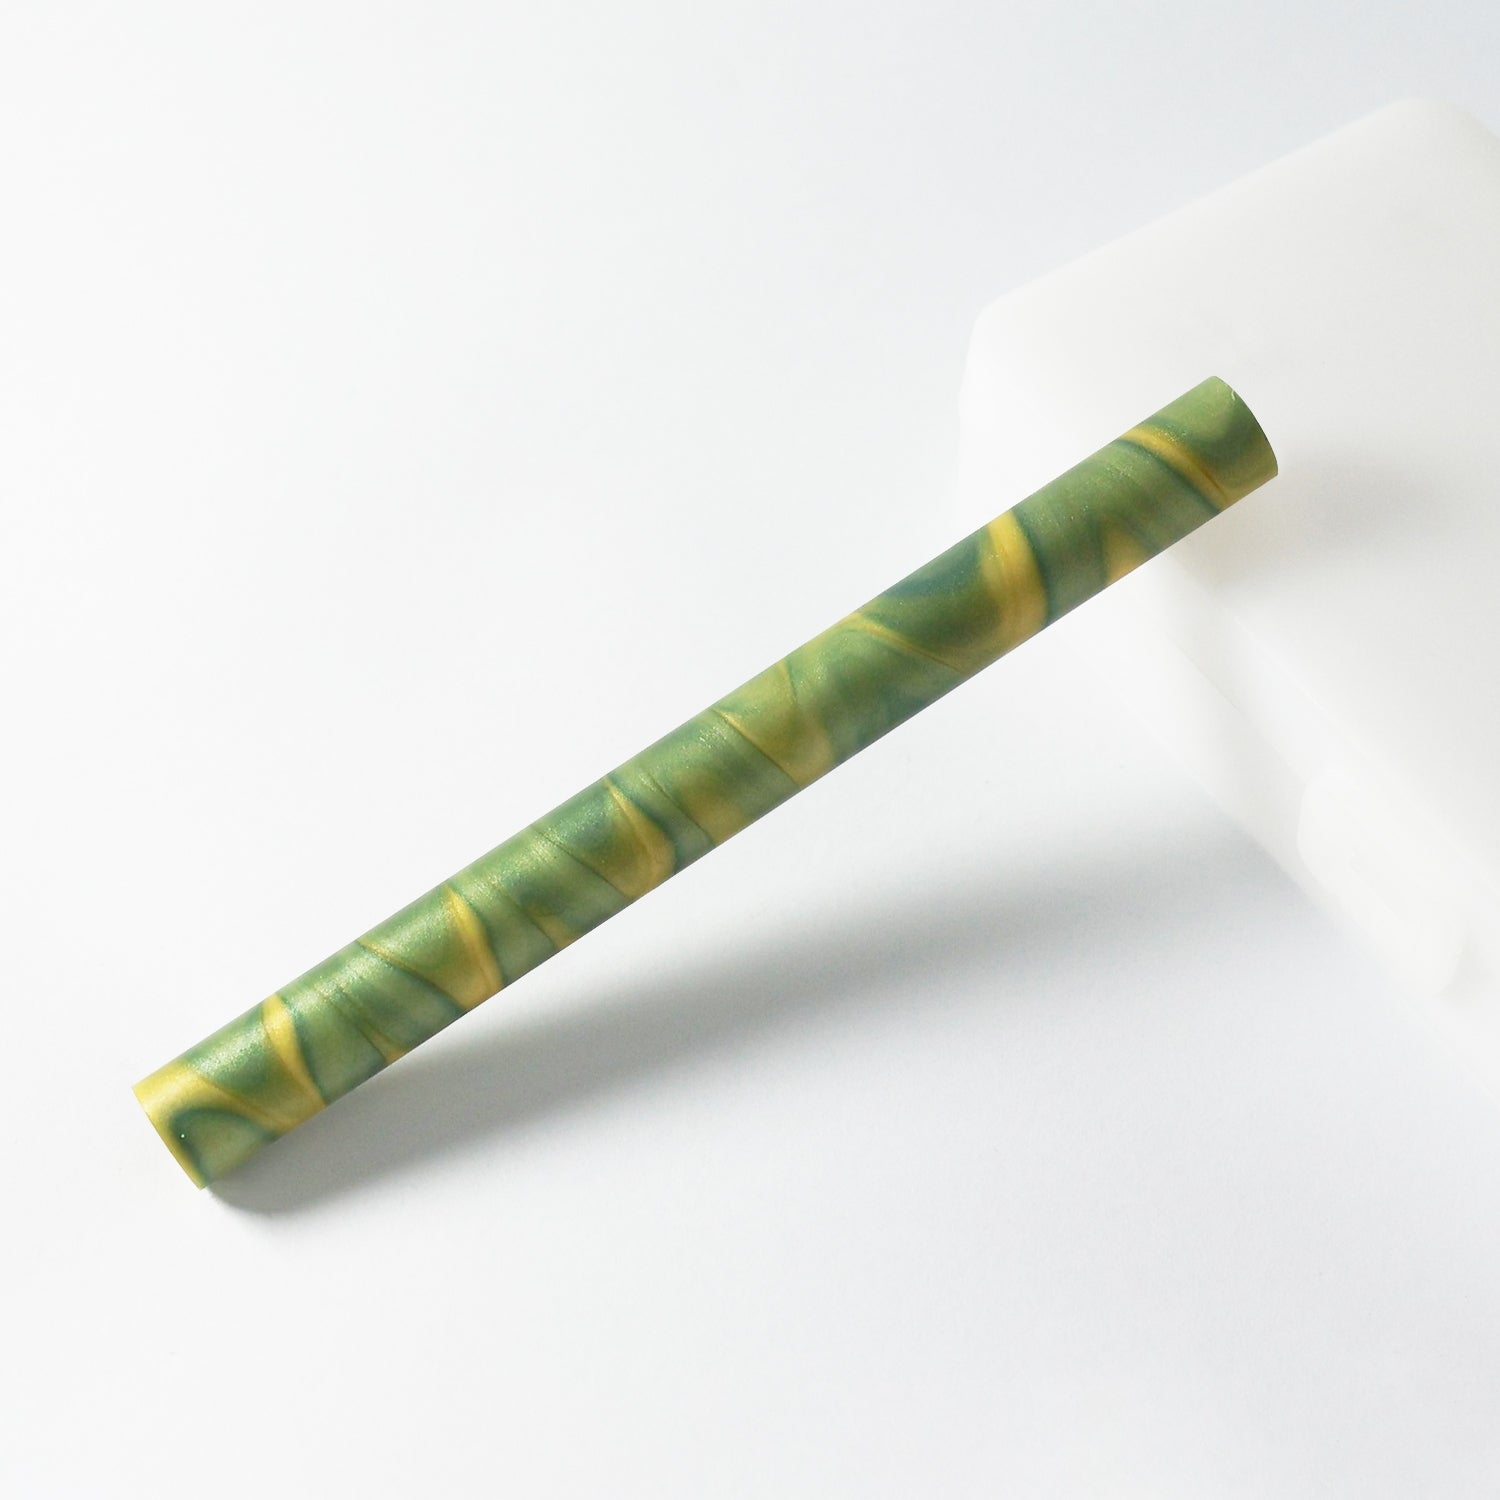 Dreamy Mixed Color Glue Gun Sealing Wax Sticks - Green Yellow 1